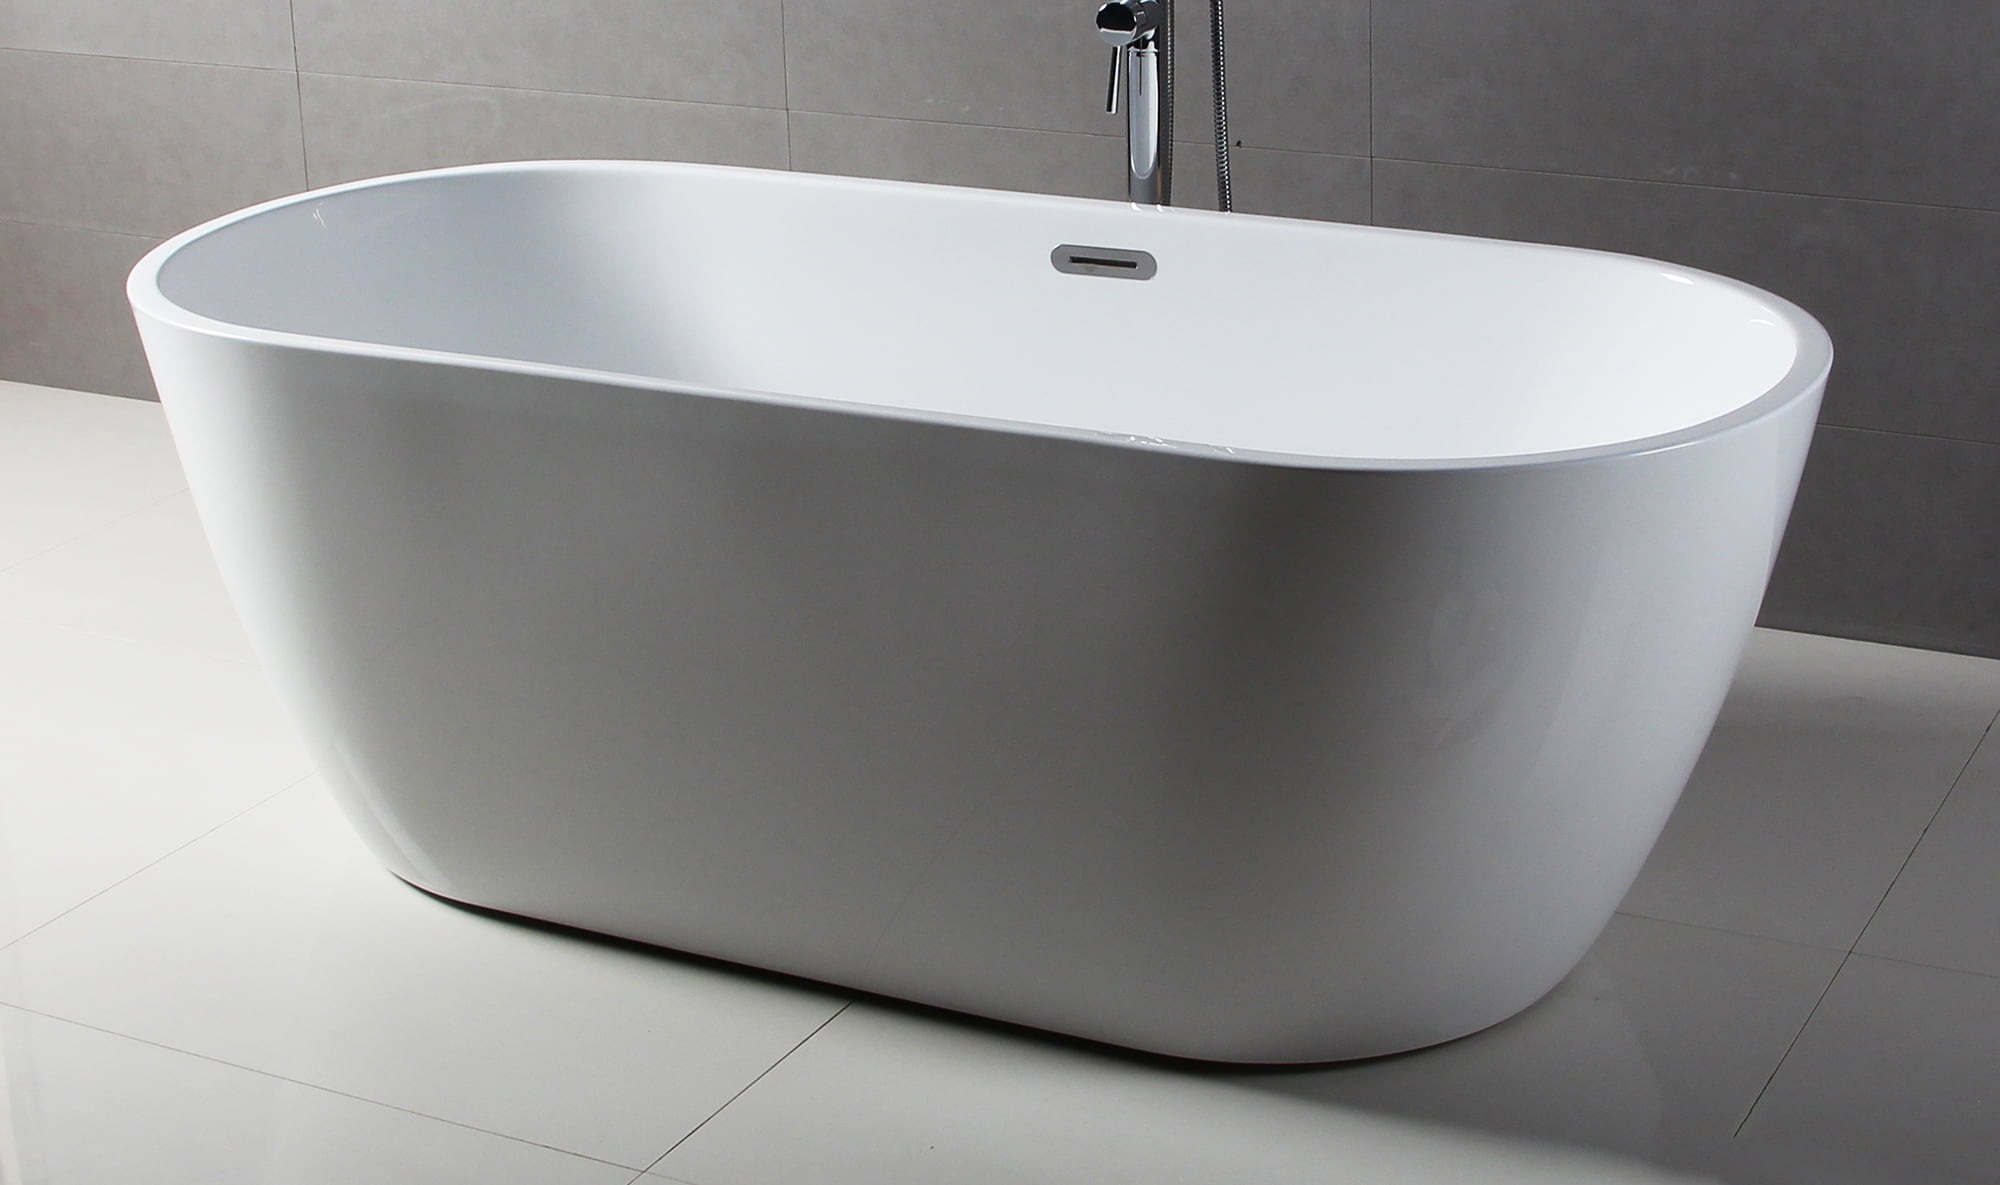 Ab8839 67 In. White Oval Acrylic Free Standing Soaking Bathtub